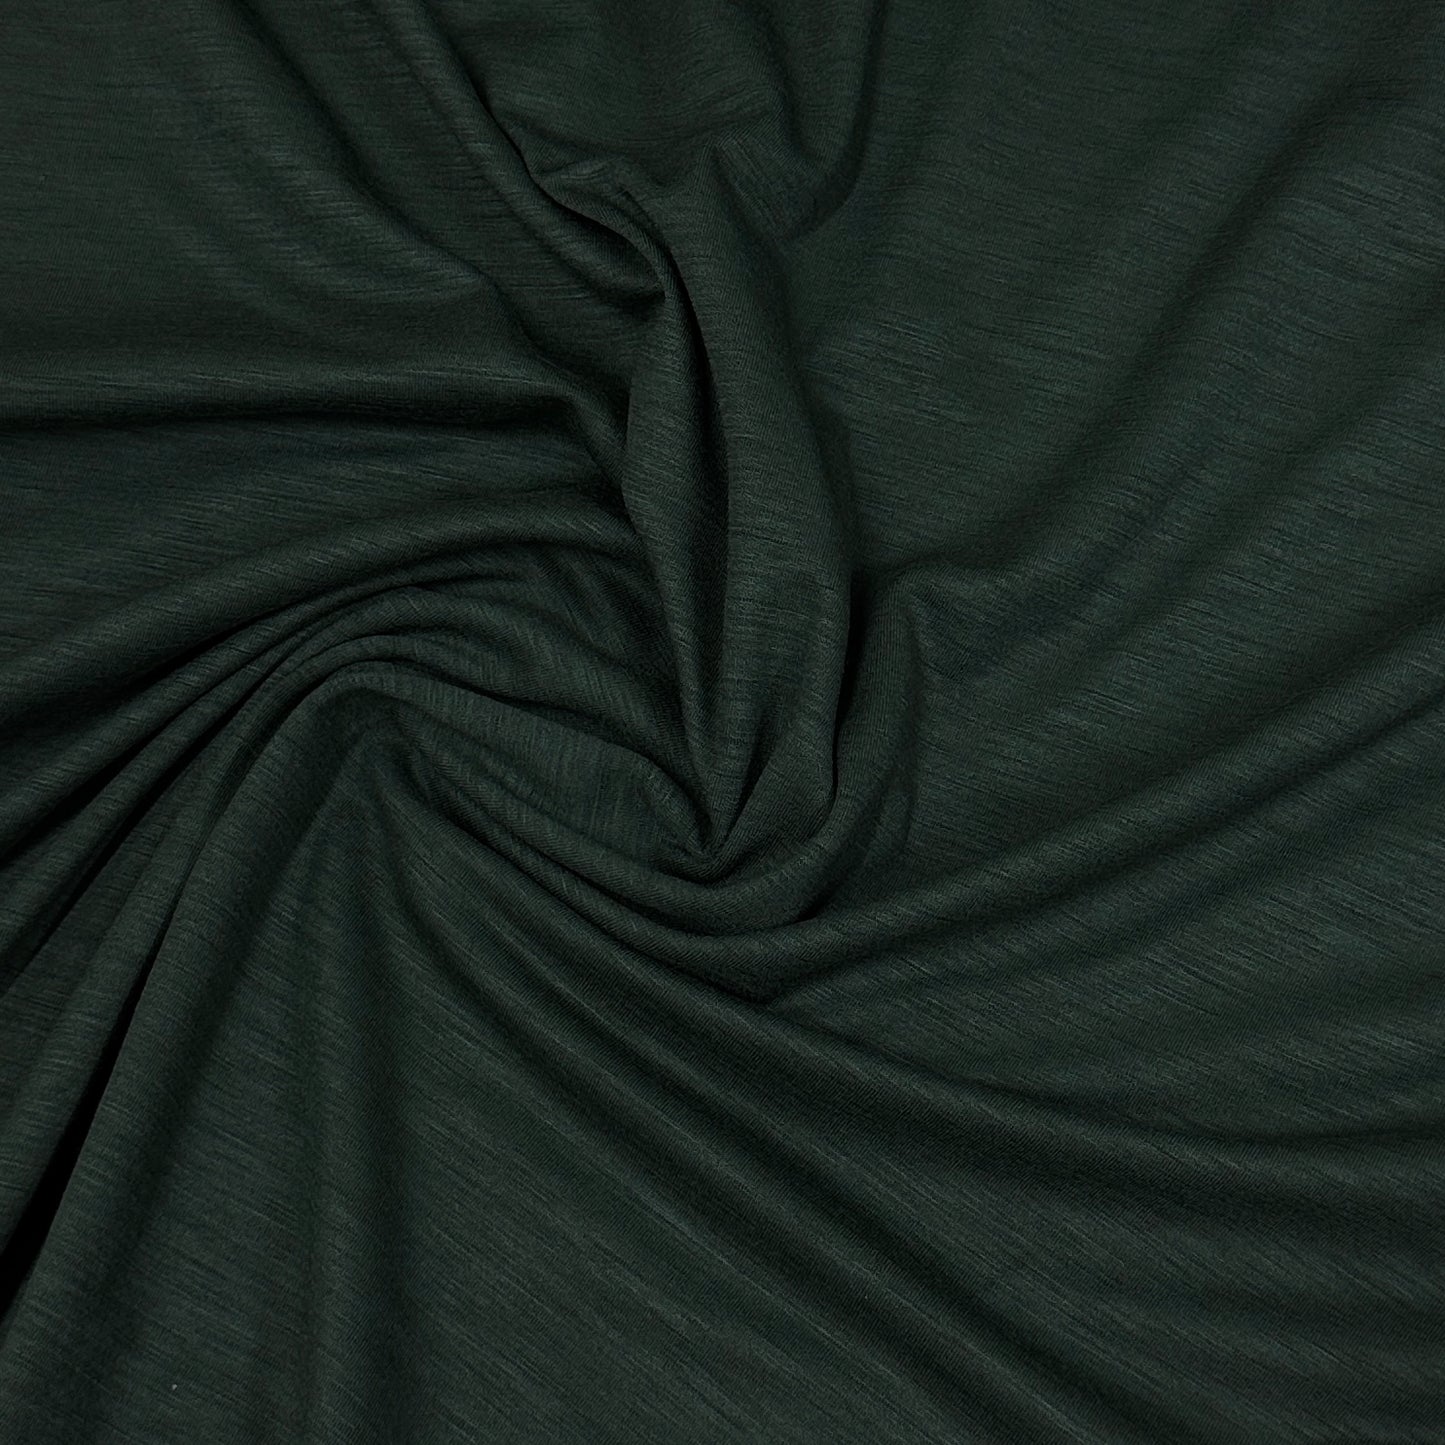 Spruce Merino Wool/Spandex Jersey Fabric